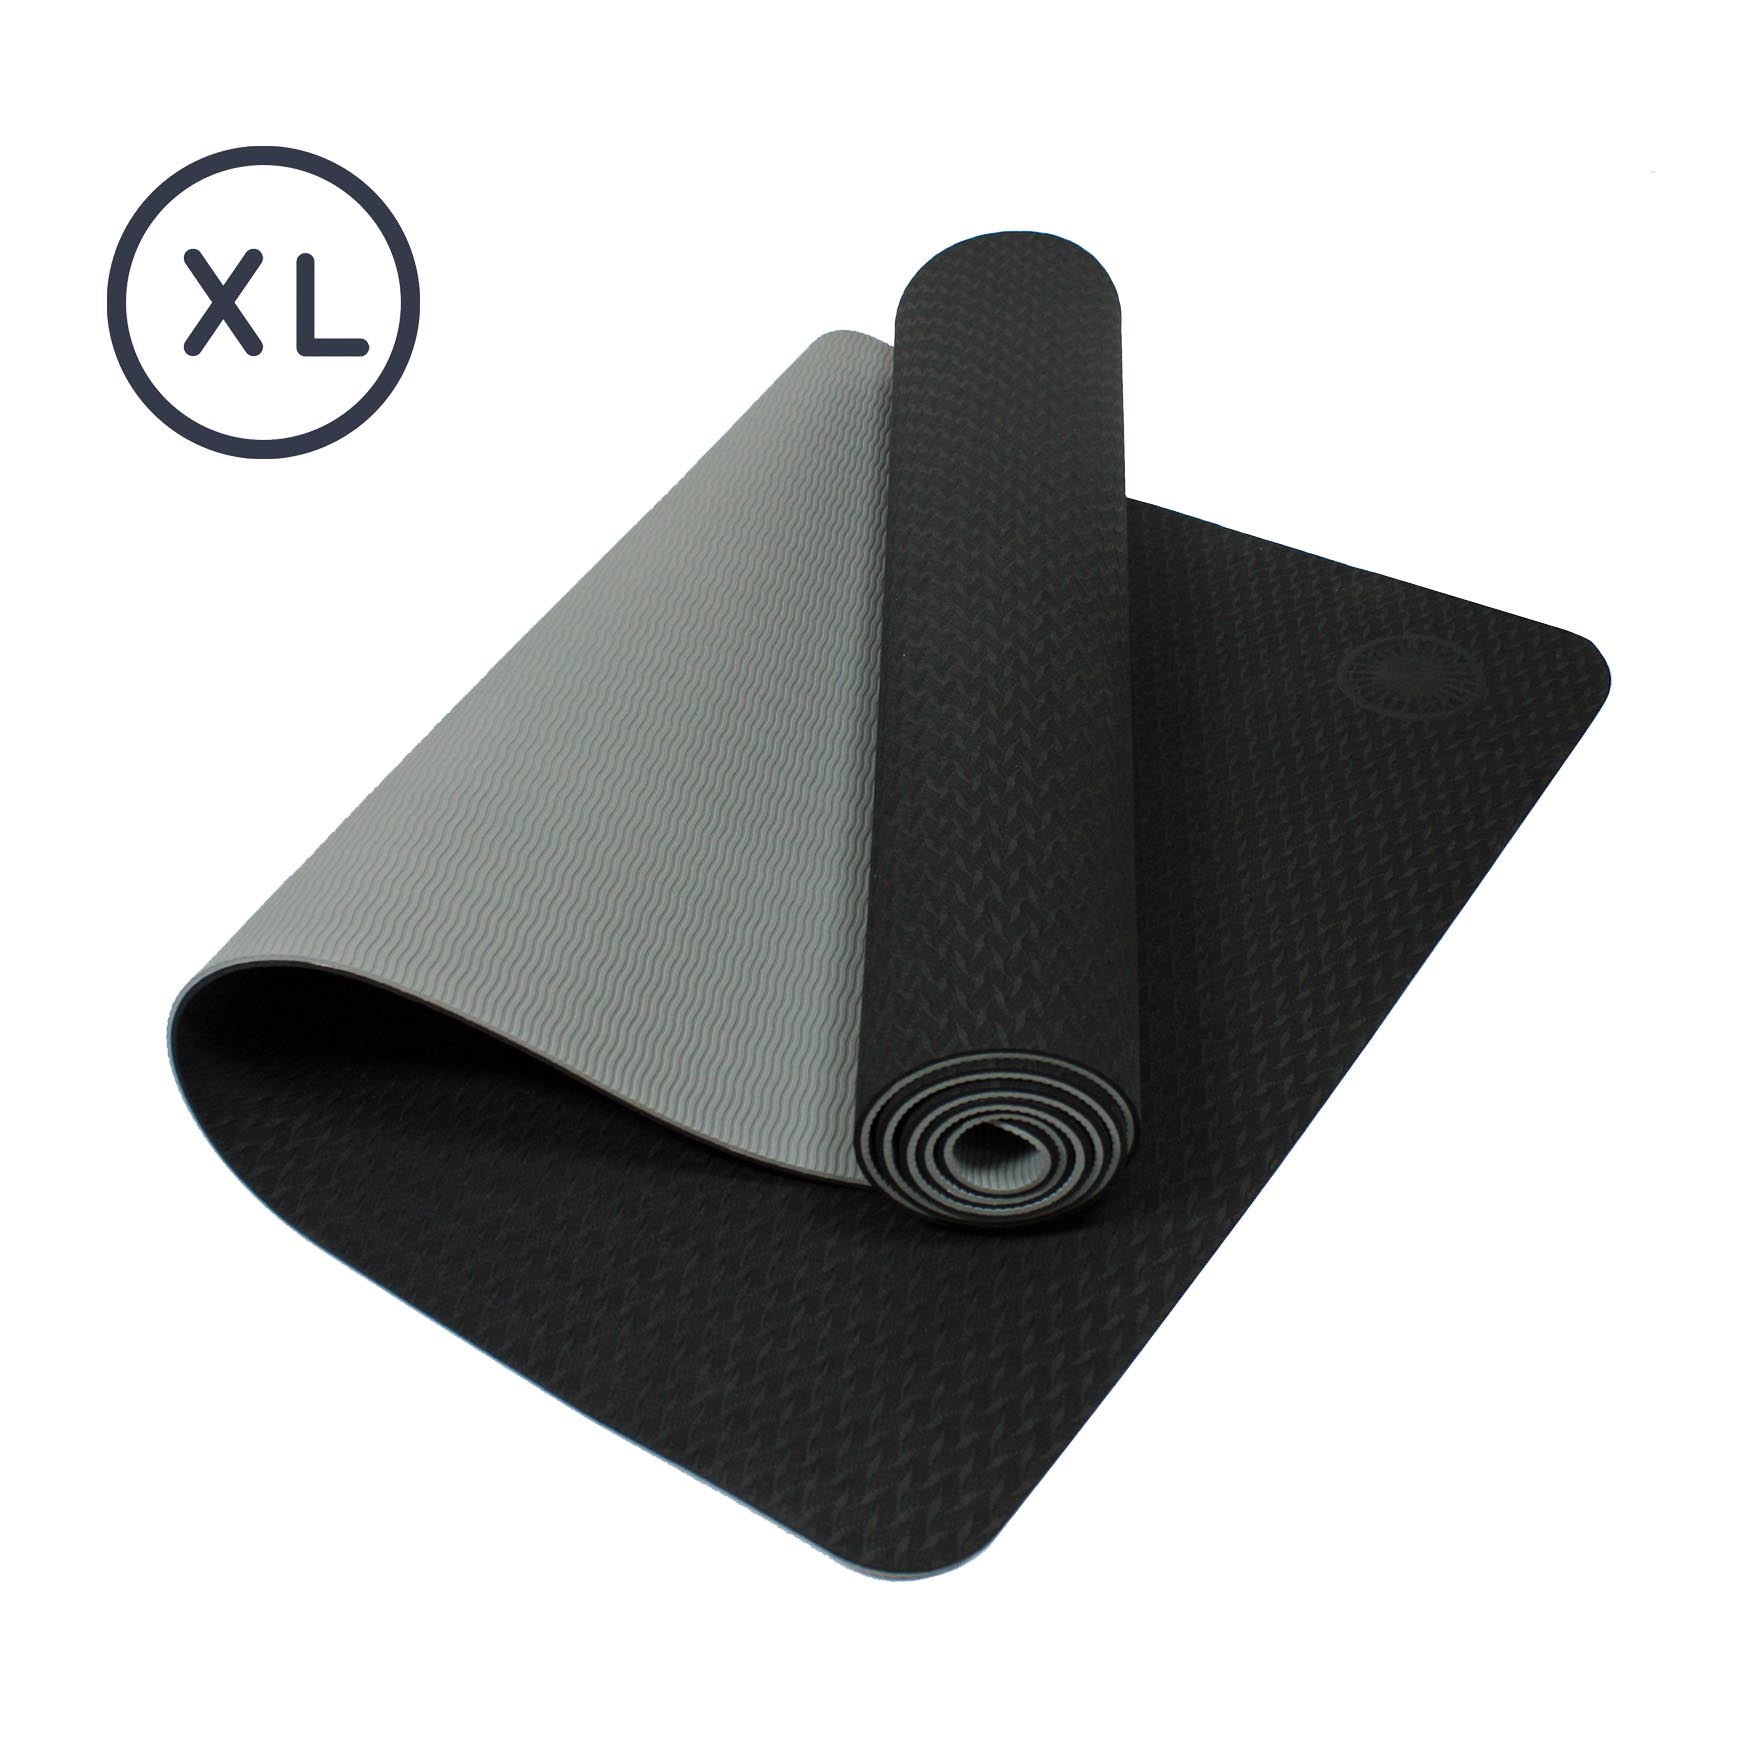 Eco sticky yoga mat – Black/Grey XL